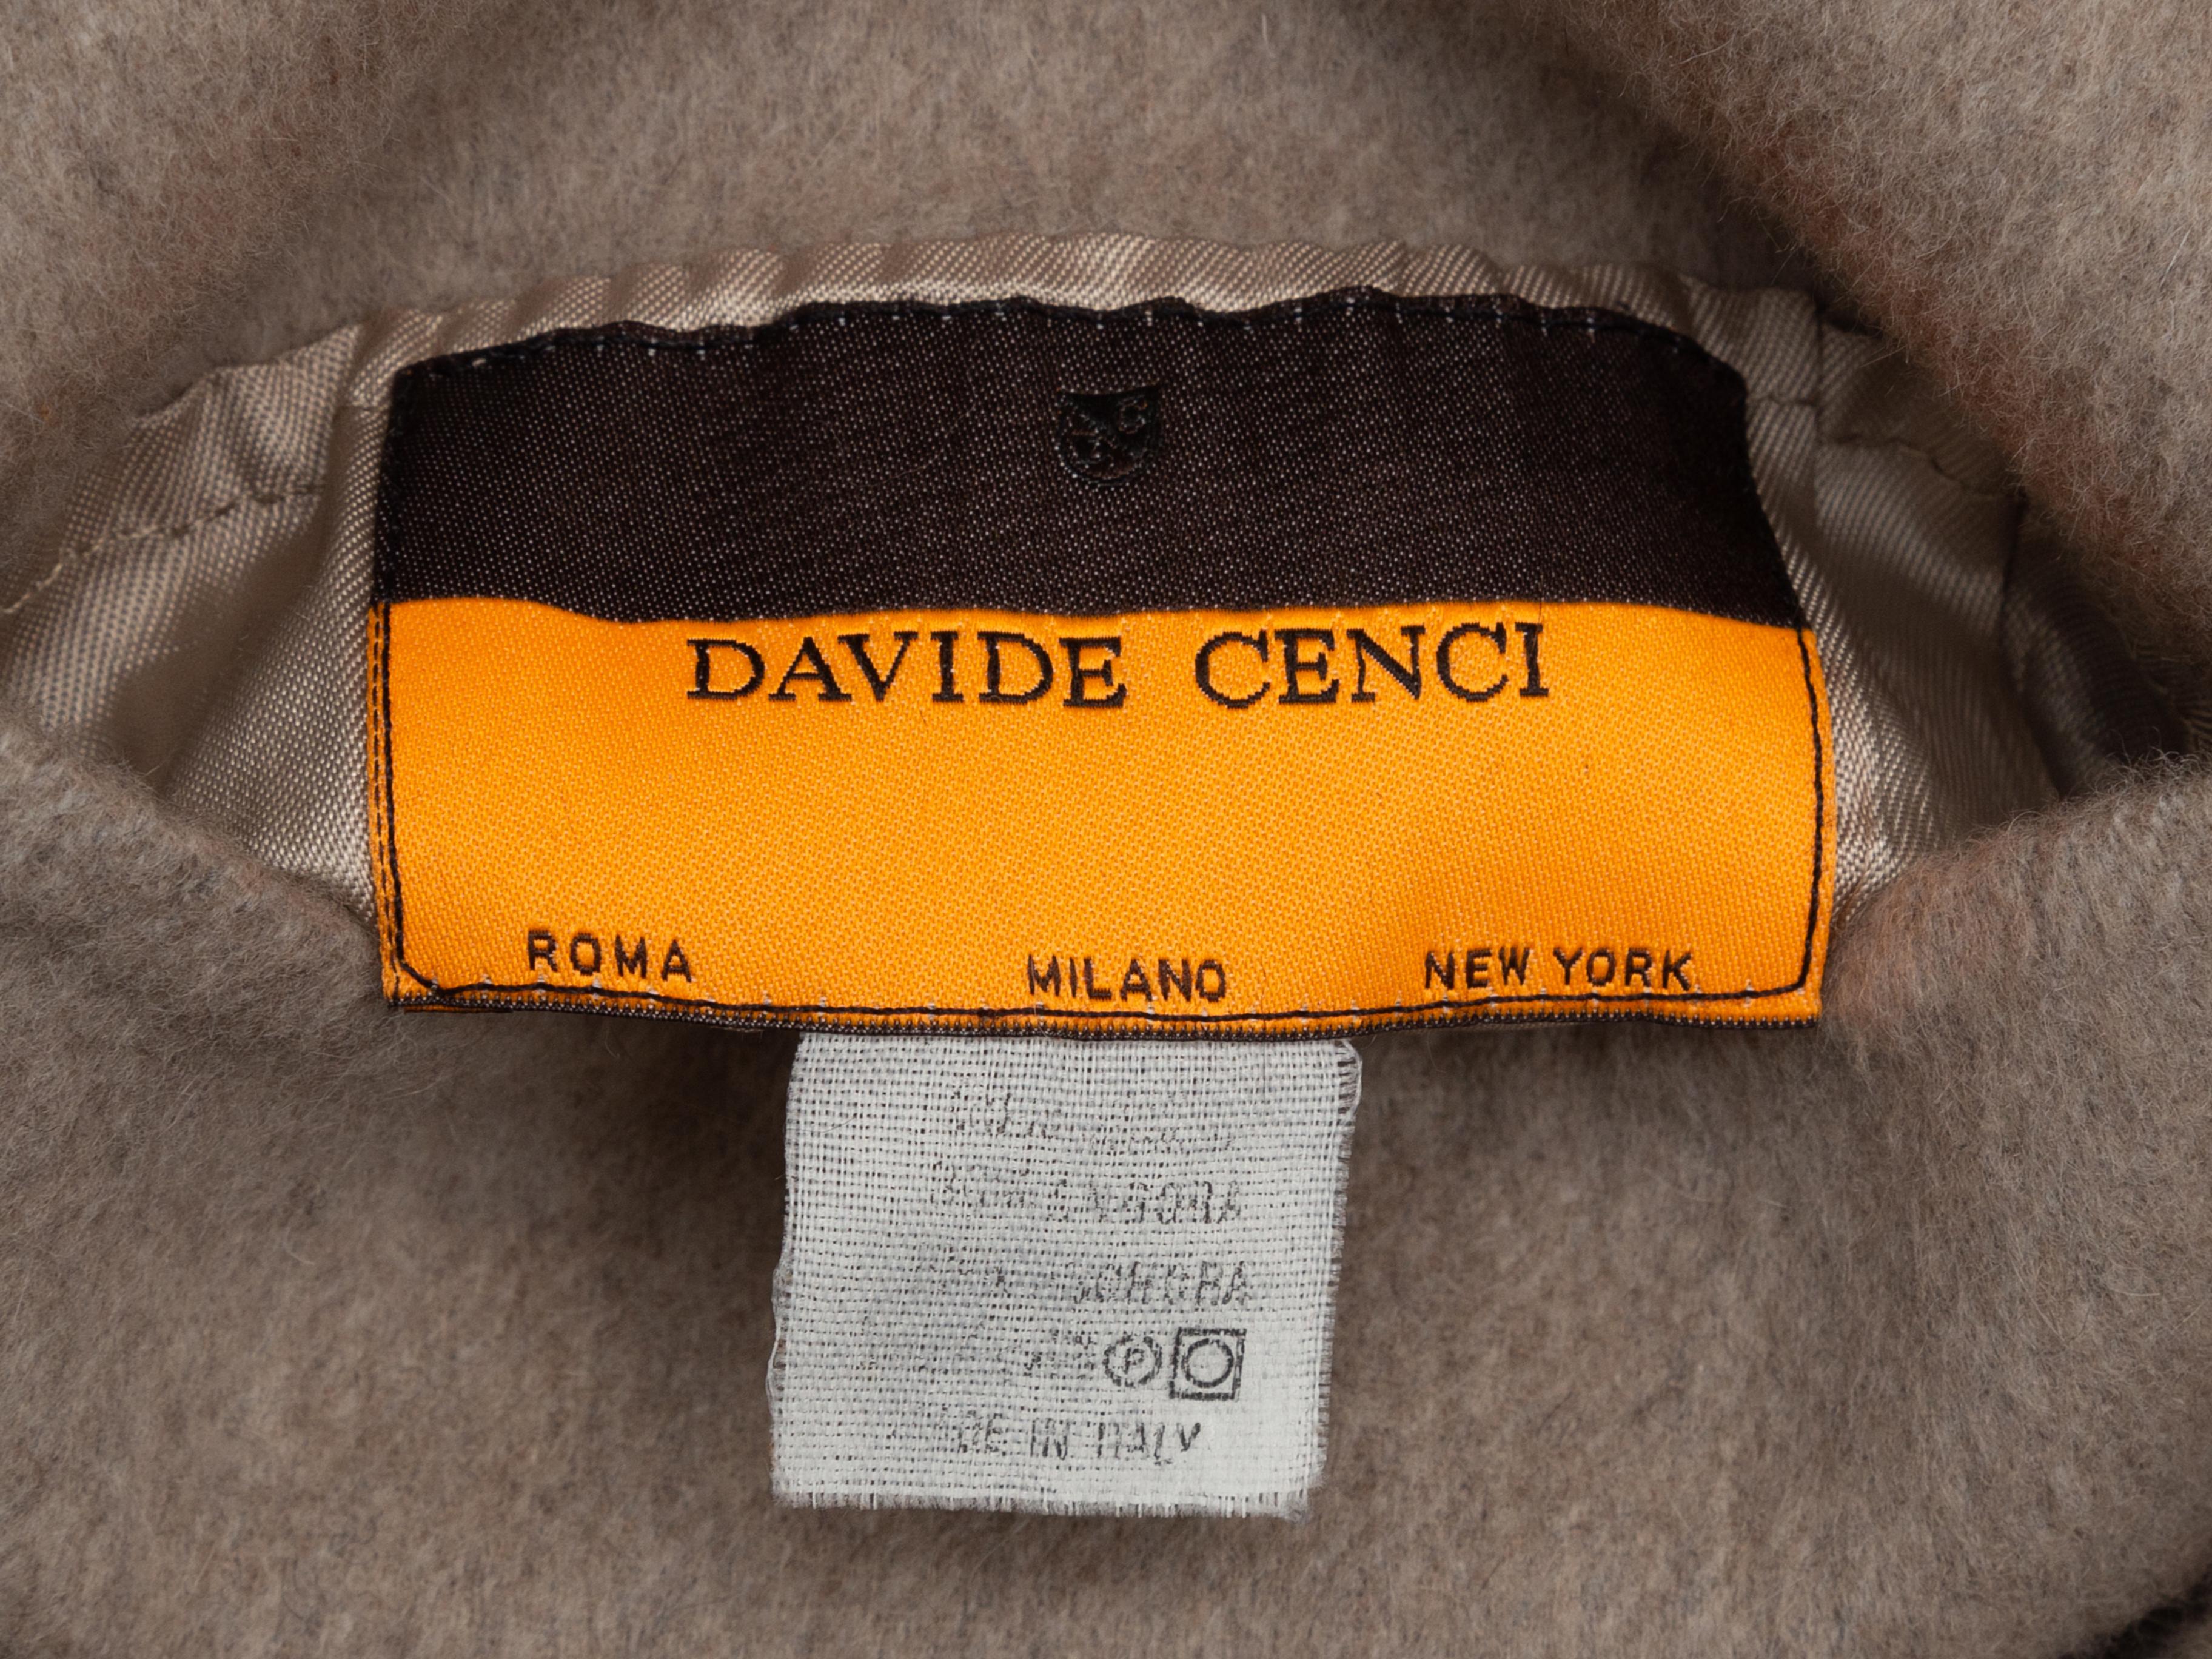 Product details: Brown cashmere long fur-trimmed coat by David Cenci. Notched lapel. Dual hip pockets. 44